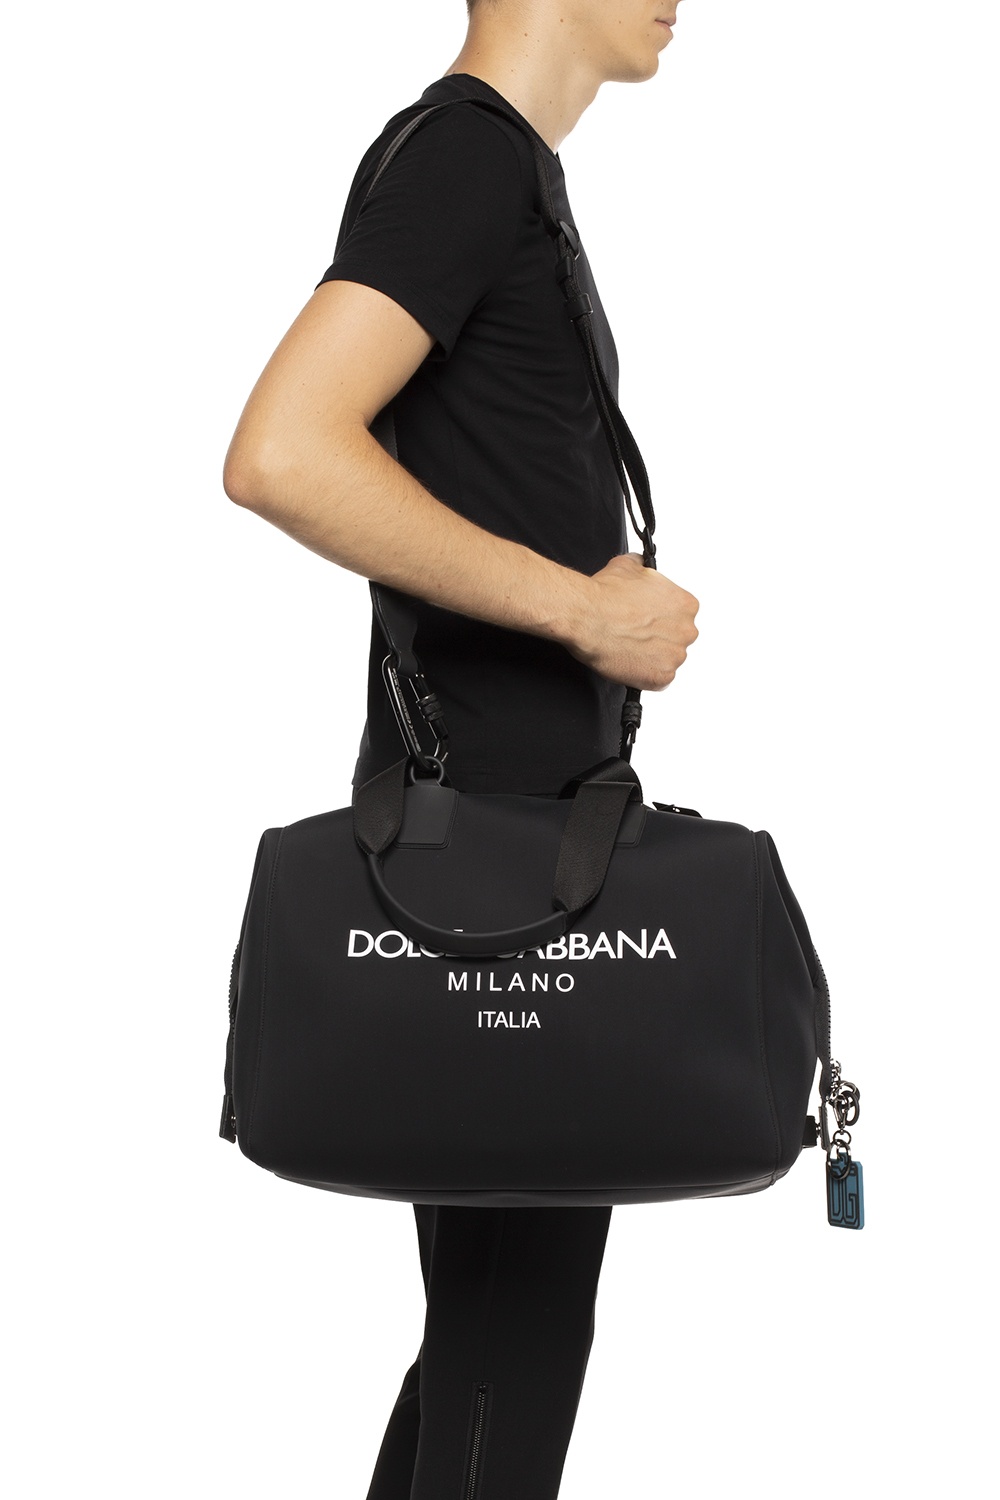 dolce and gabbana travel bag